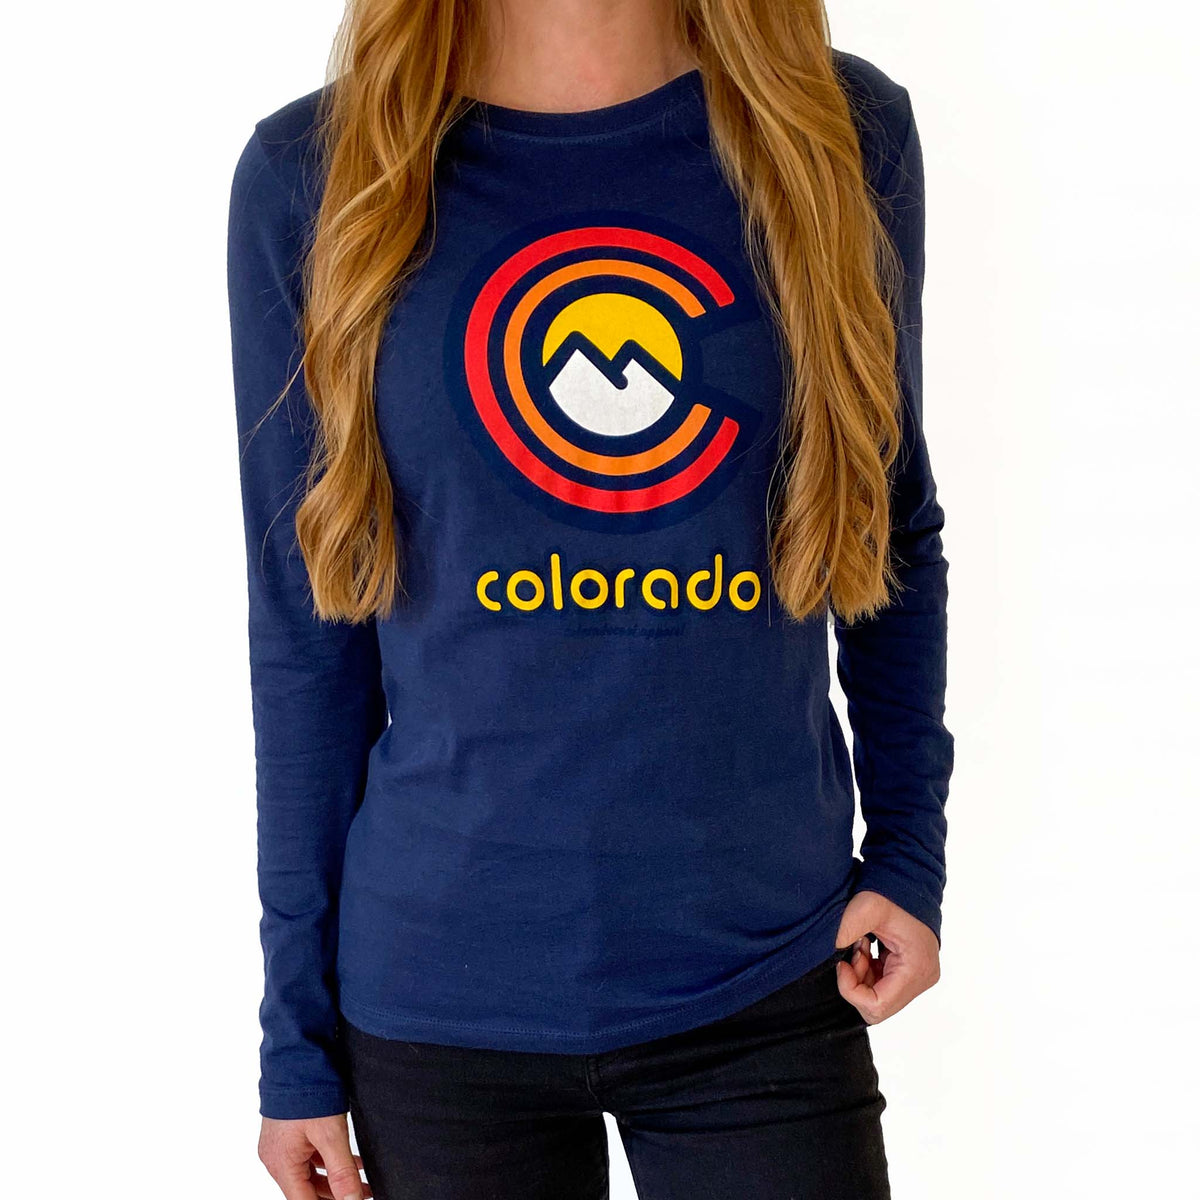 ColoradoCool Apparel Colorado Flag Womens Longsleeve Shirt - Far Out Design - Local Colorado Apparel Small